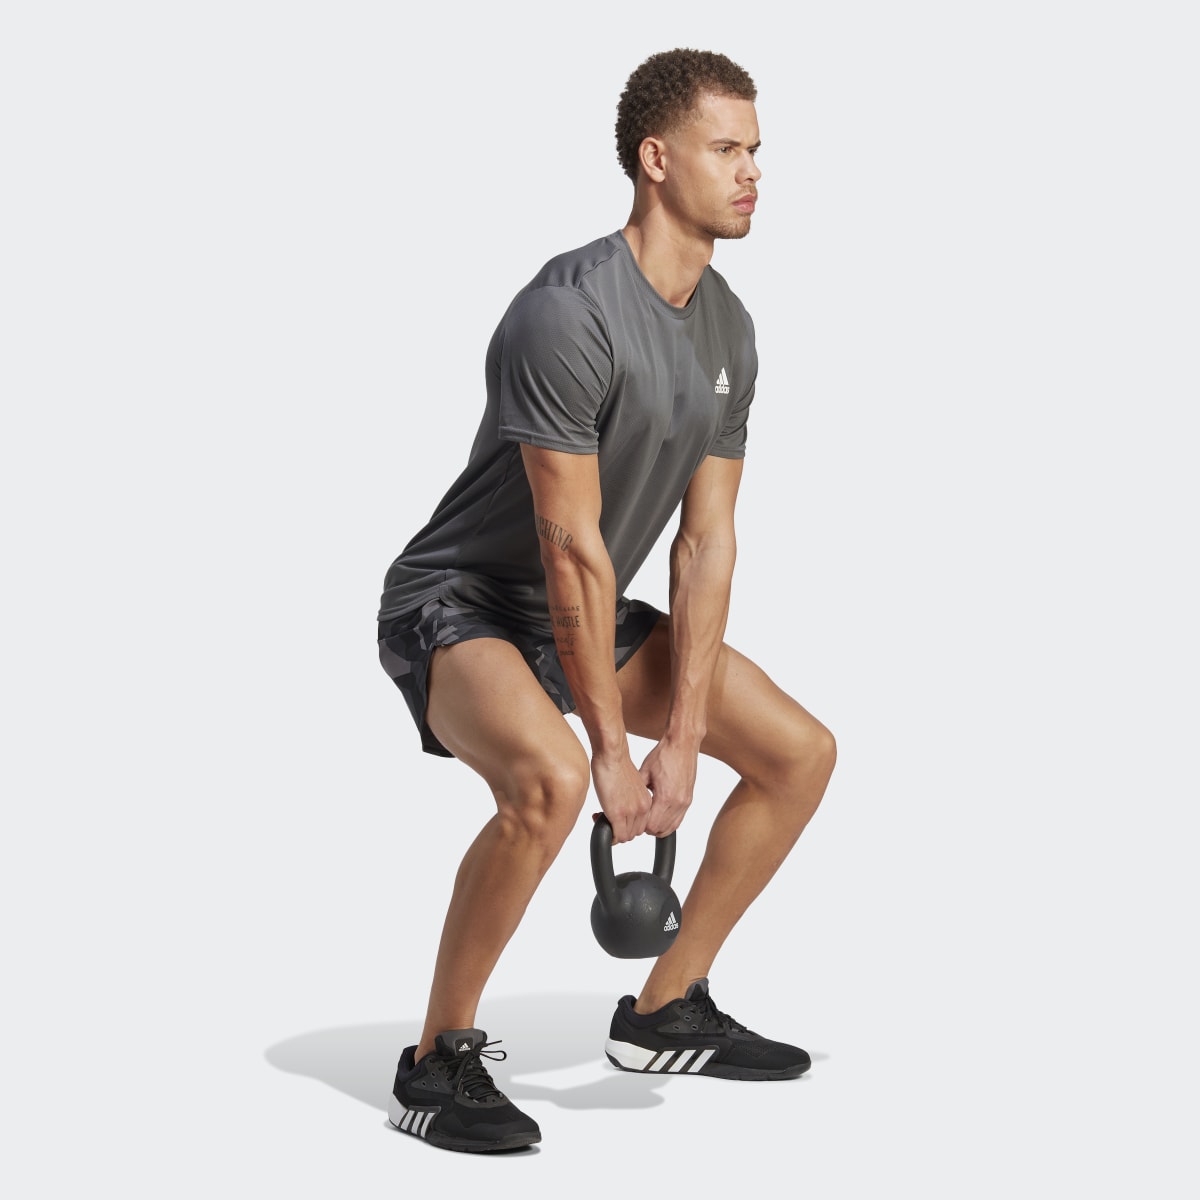 Adidas Designed for Training Pro Series Strength Shorts. 4